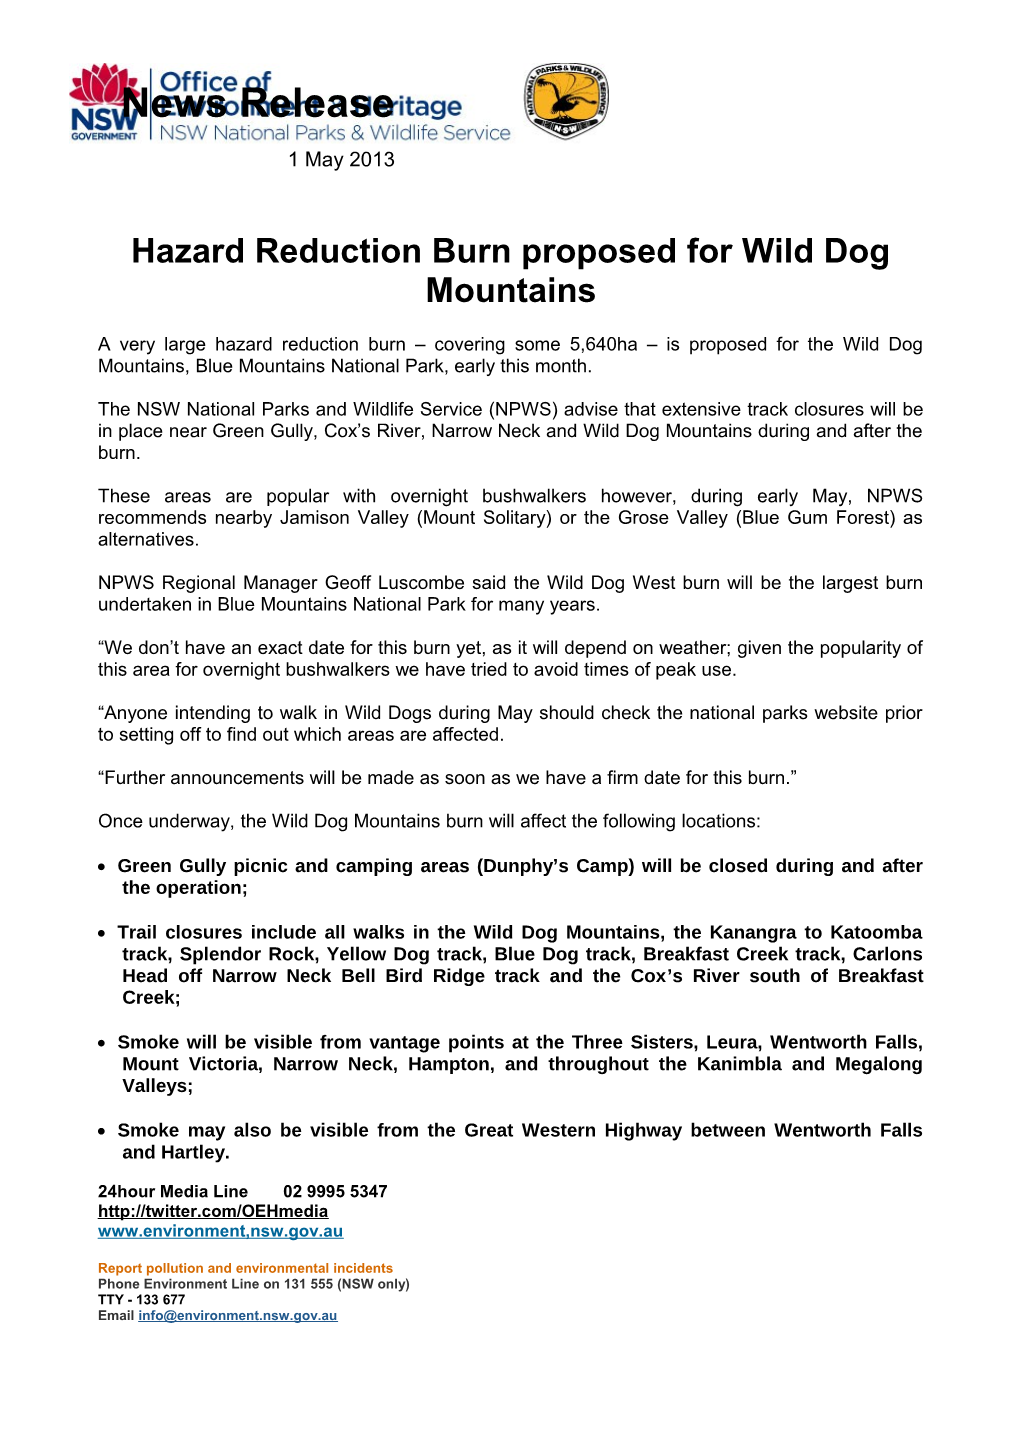 Hazard Reduction Burn Proposed for Wild Dog Mountains